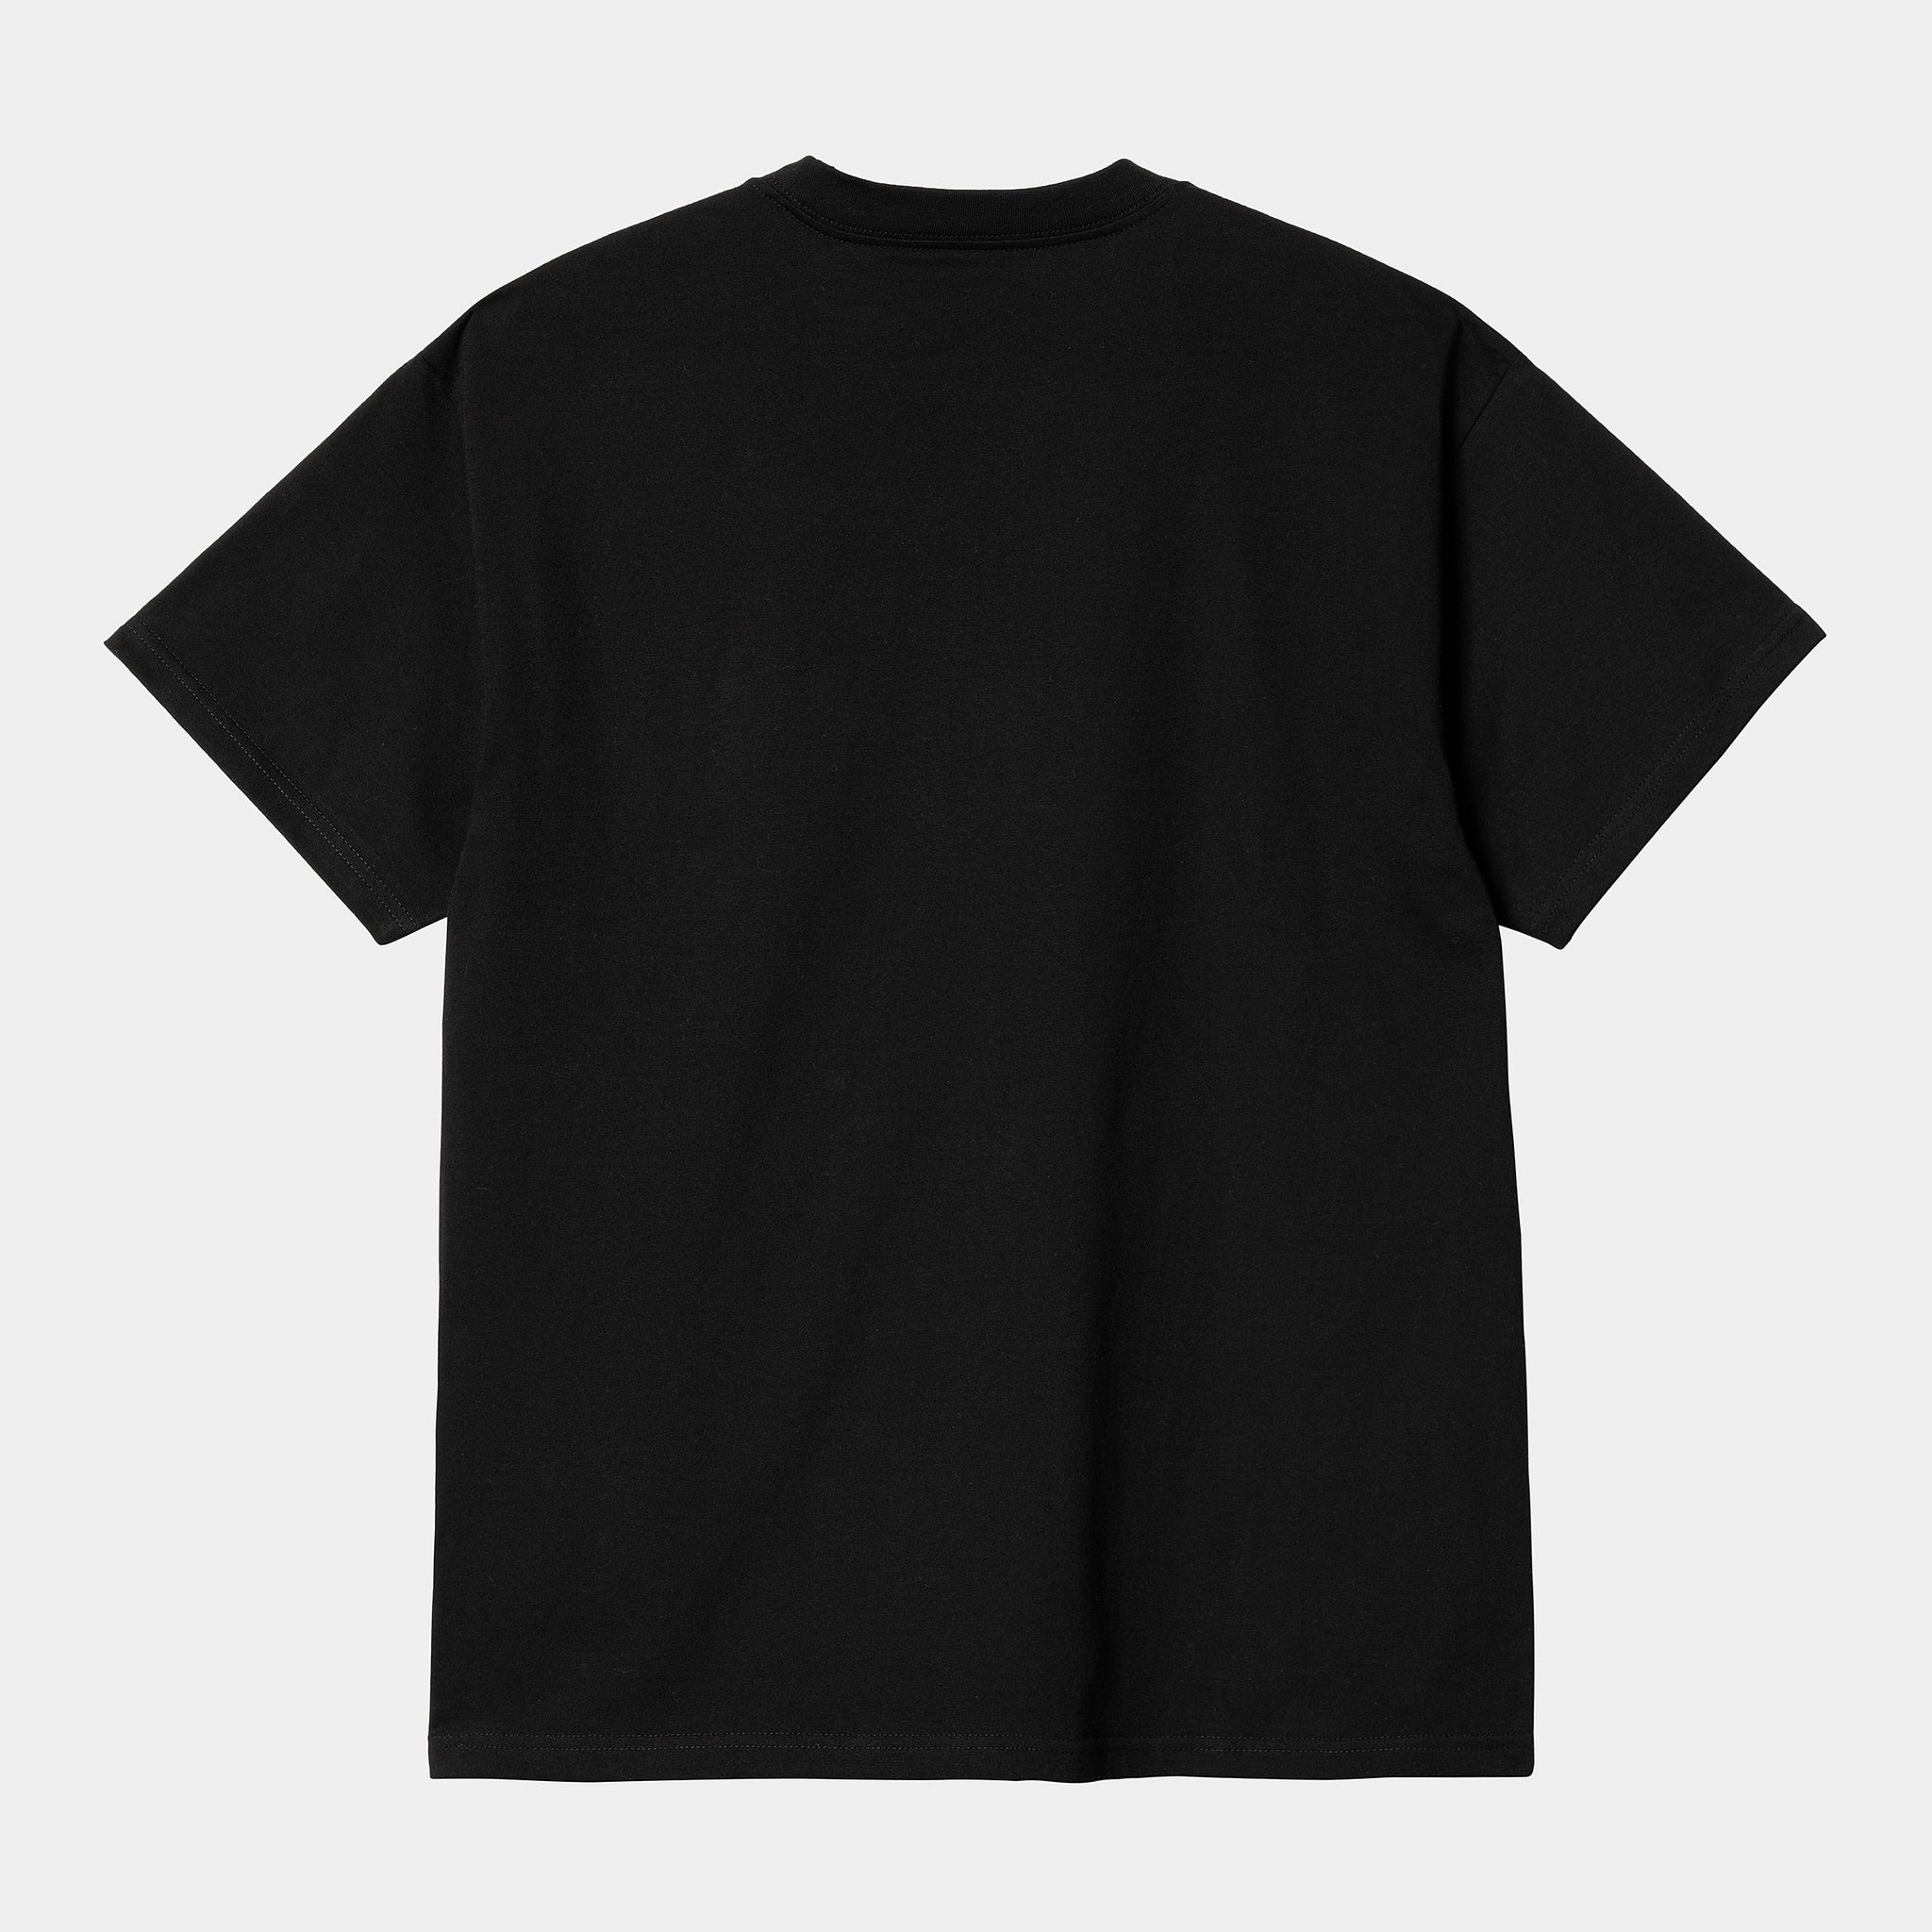 S/s Archive Girl T-shirt Organic Cotton Single Jersey, 175 G/m² (Black)